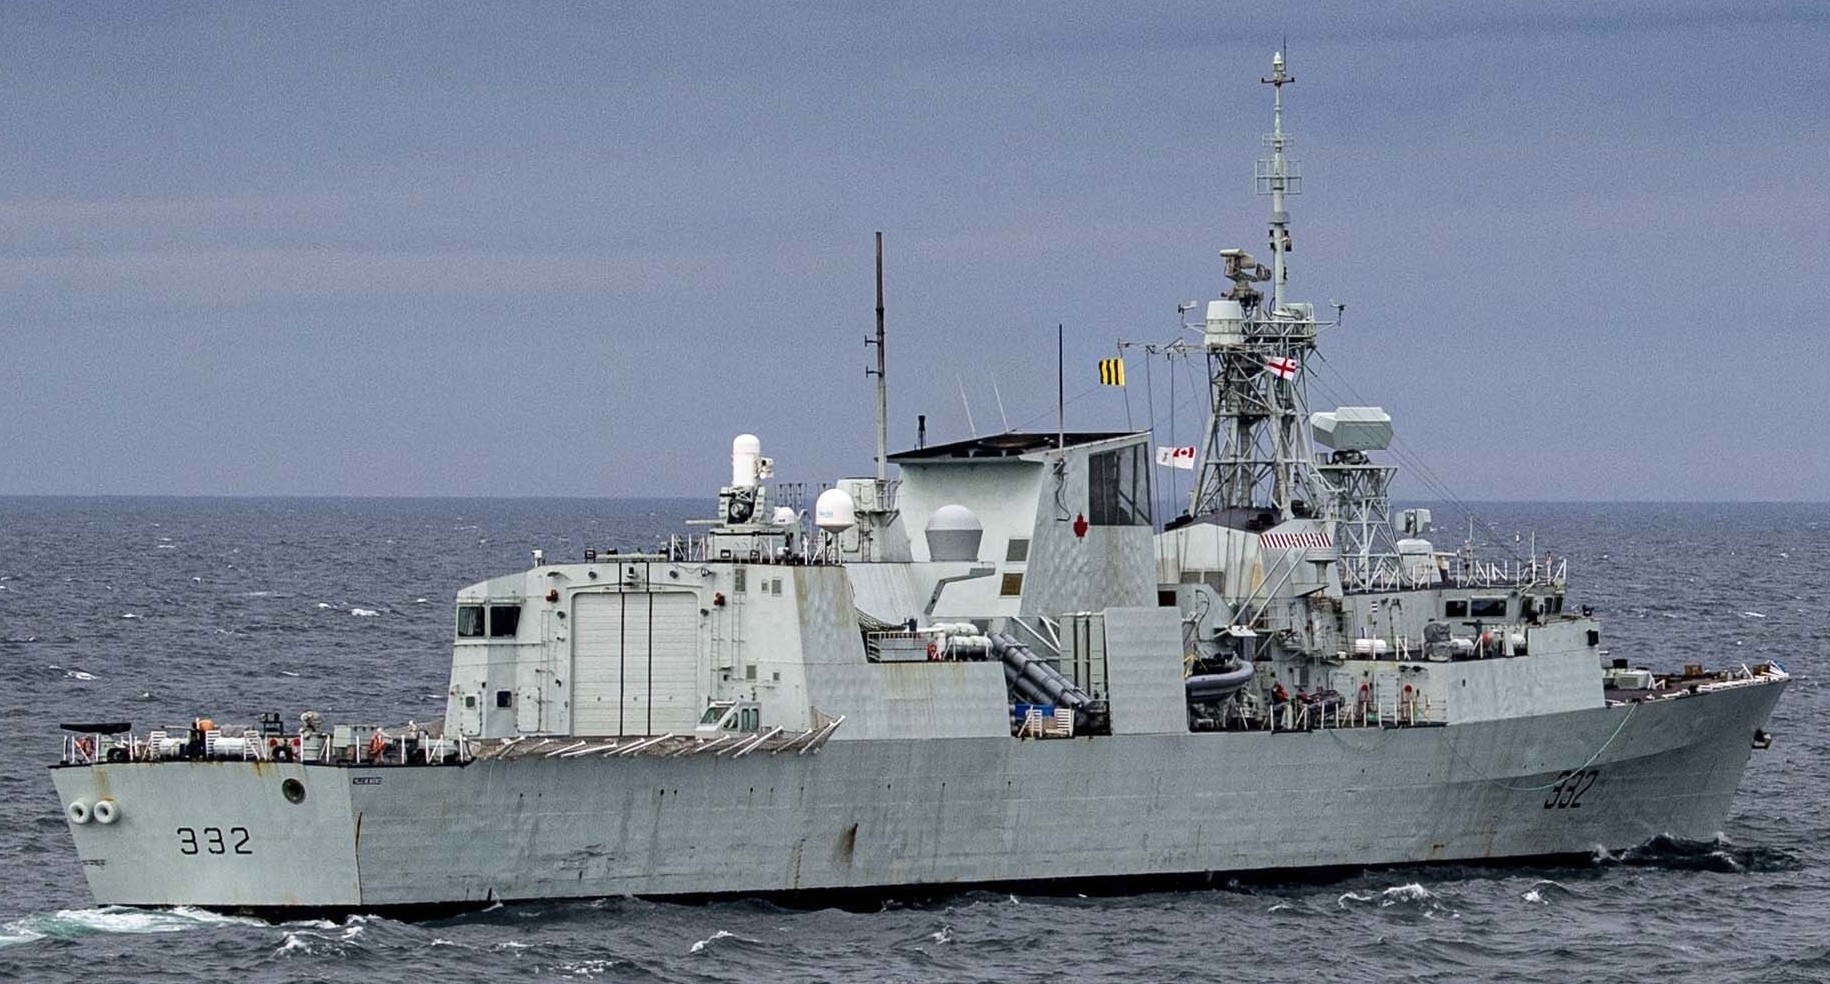 ffh-332 hmcs ville de quebec halifax class helicopter patrol frigate ncsm royal canadian navy 08